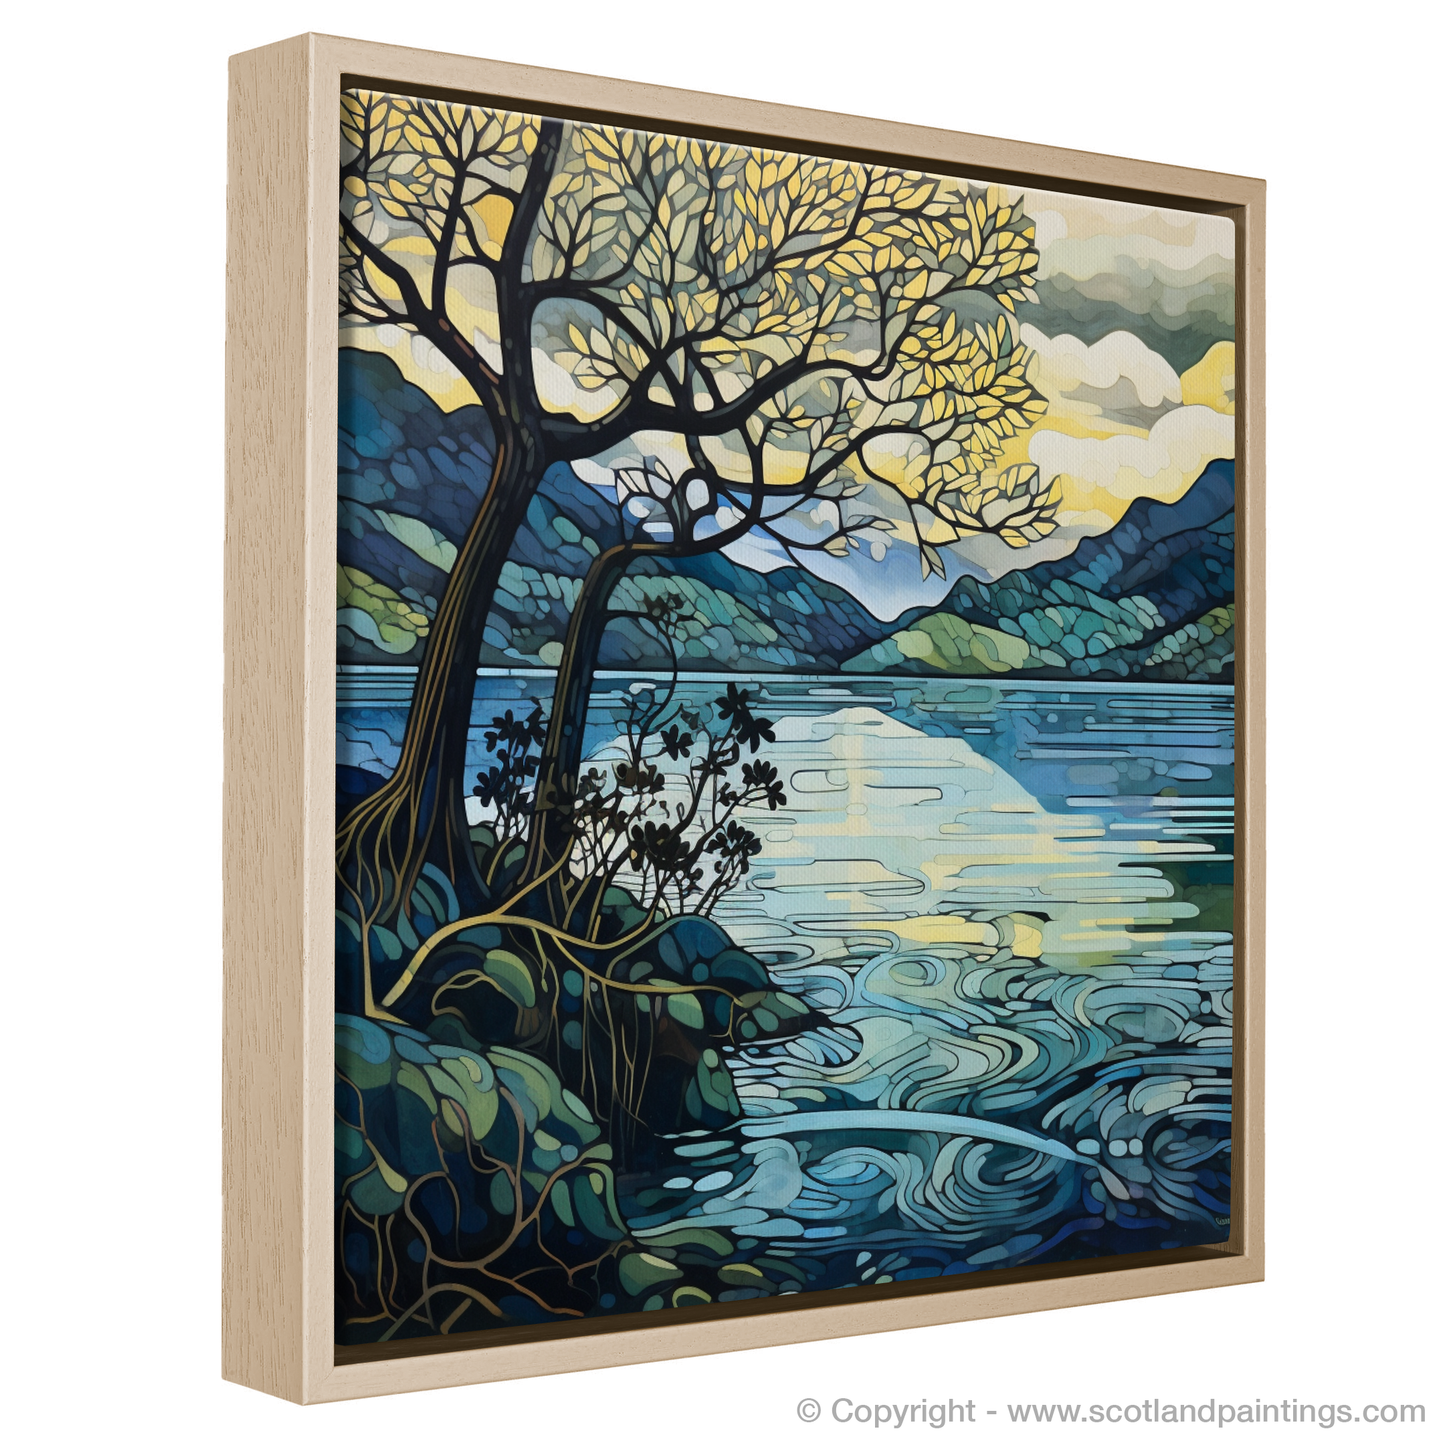 Painting and Art Print of Loch Lomond entitled "Art Nouveau Elegance of Loch Lomond".